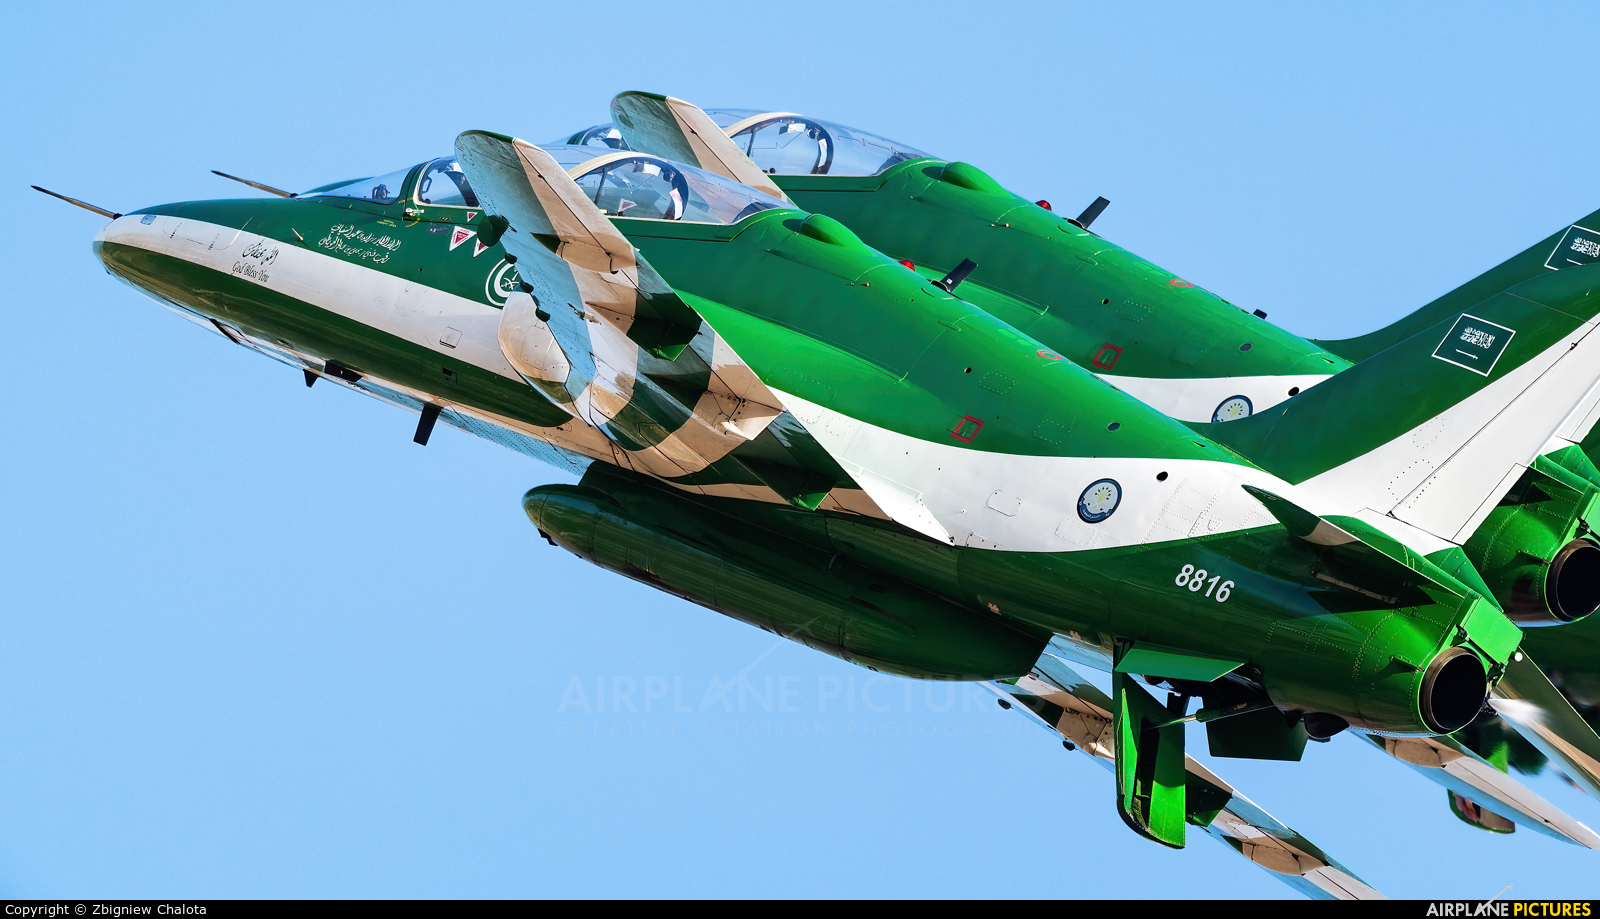 Saudi Arabia - Air Force: Saudi Hawks 8816 aircraft at Tanagra